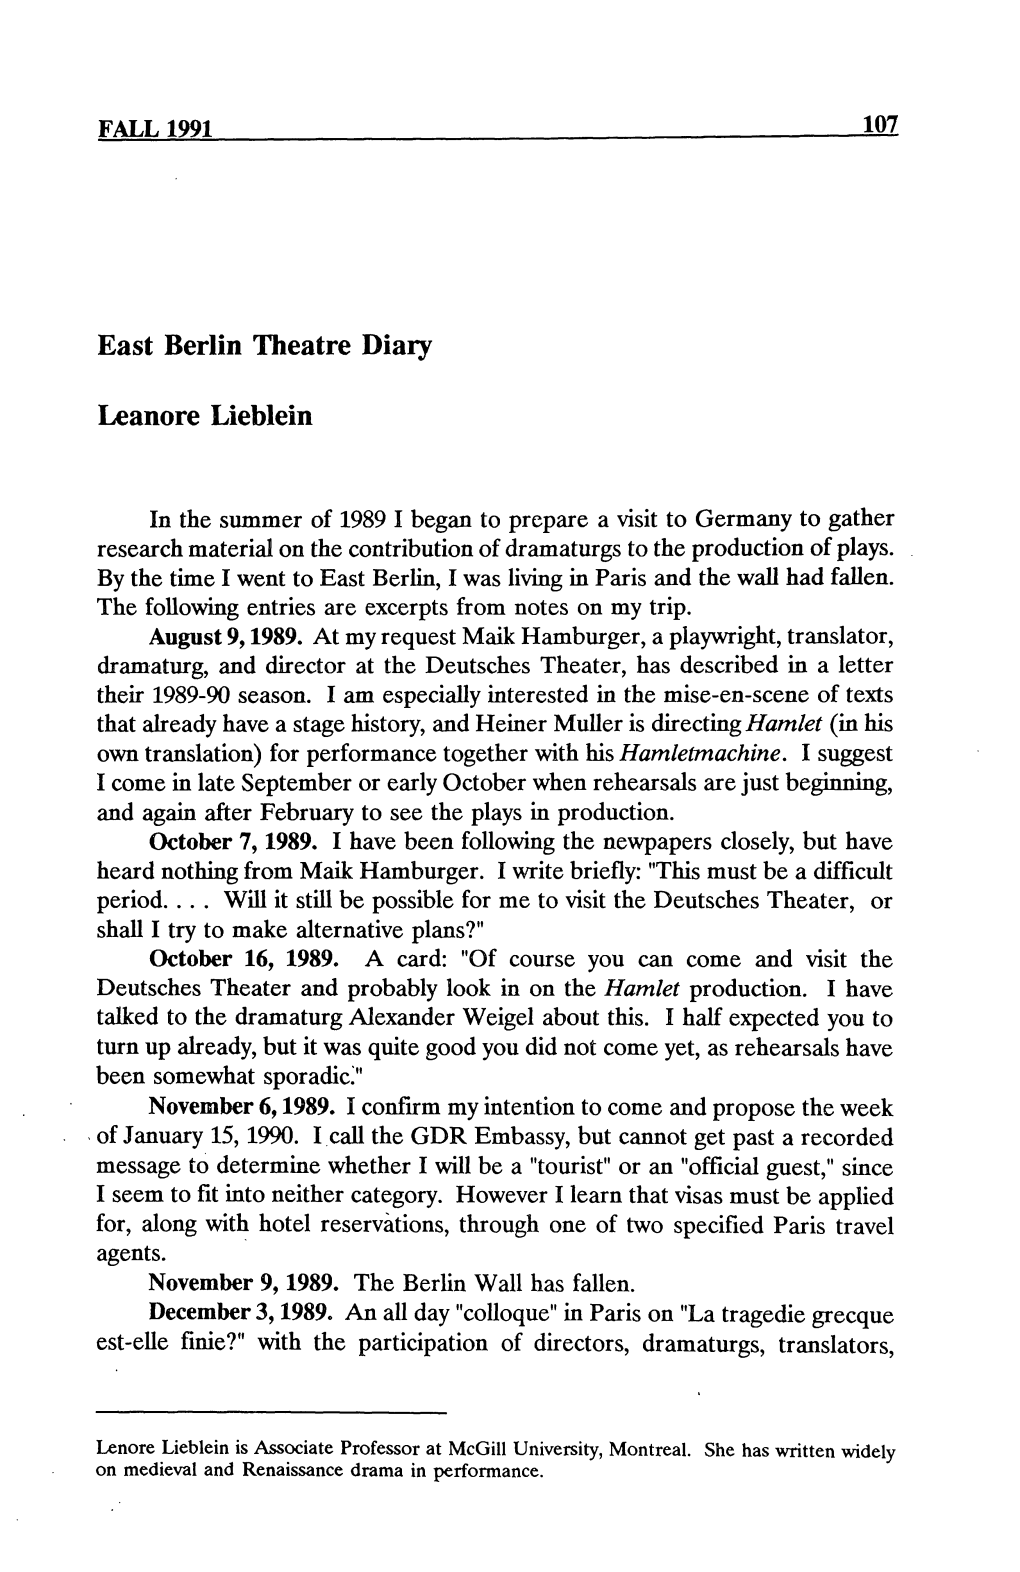 East Berlin Theatre Diary Leanore Lieblein